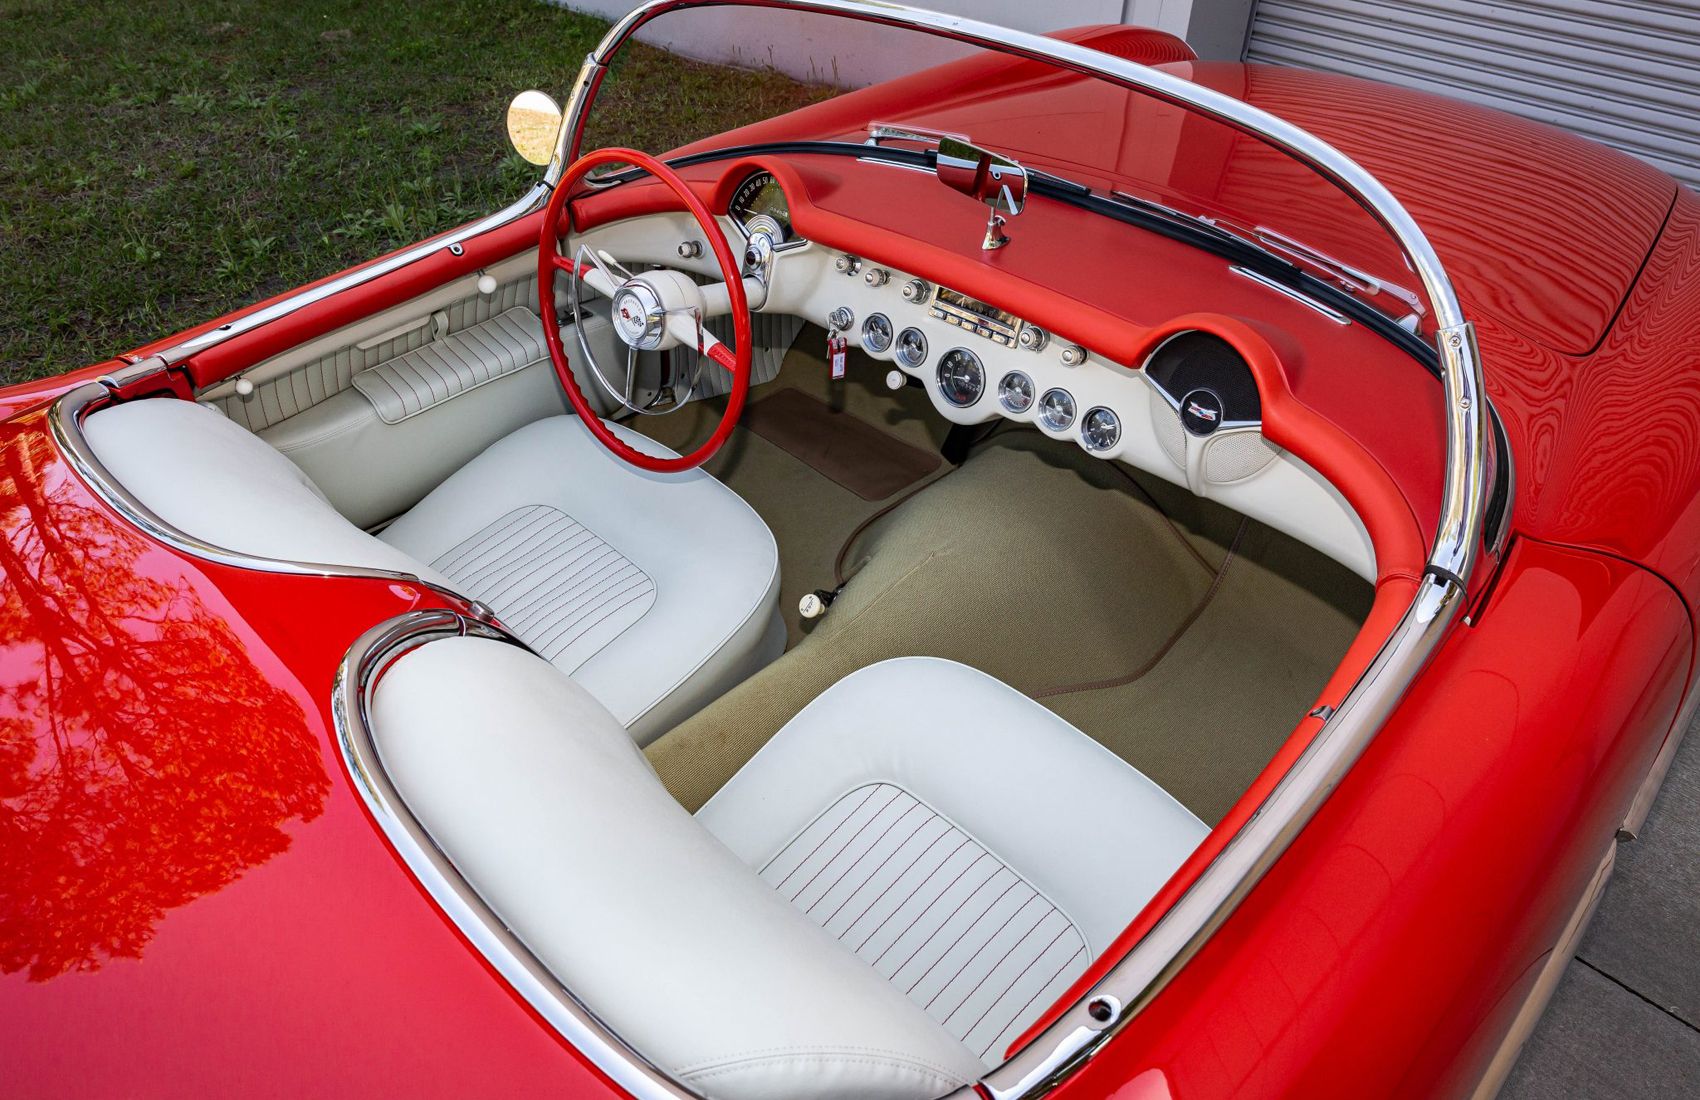 1955 Chevrolet Corvette Interior With Light Beige Interior